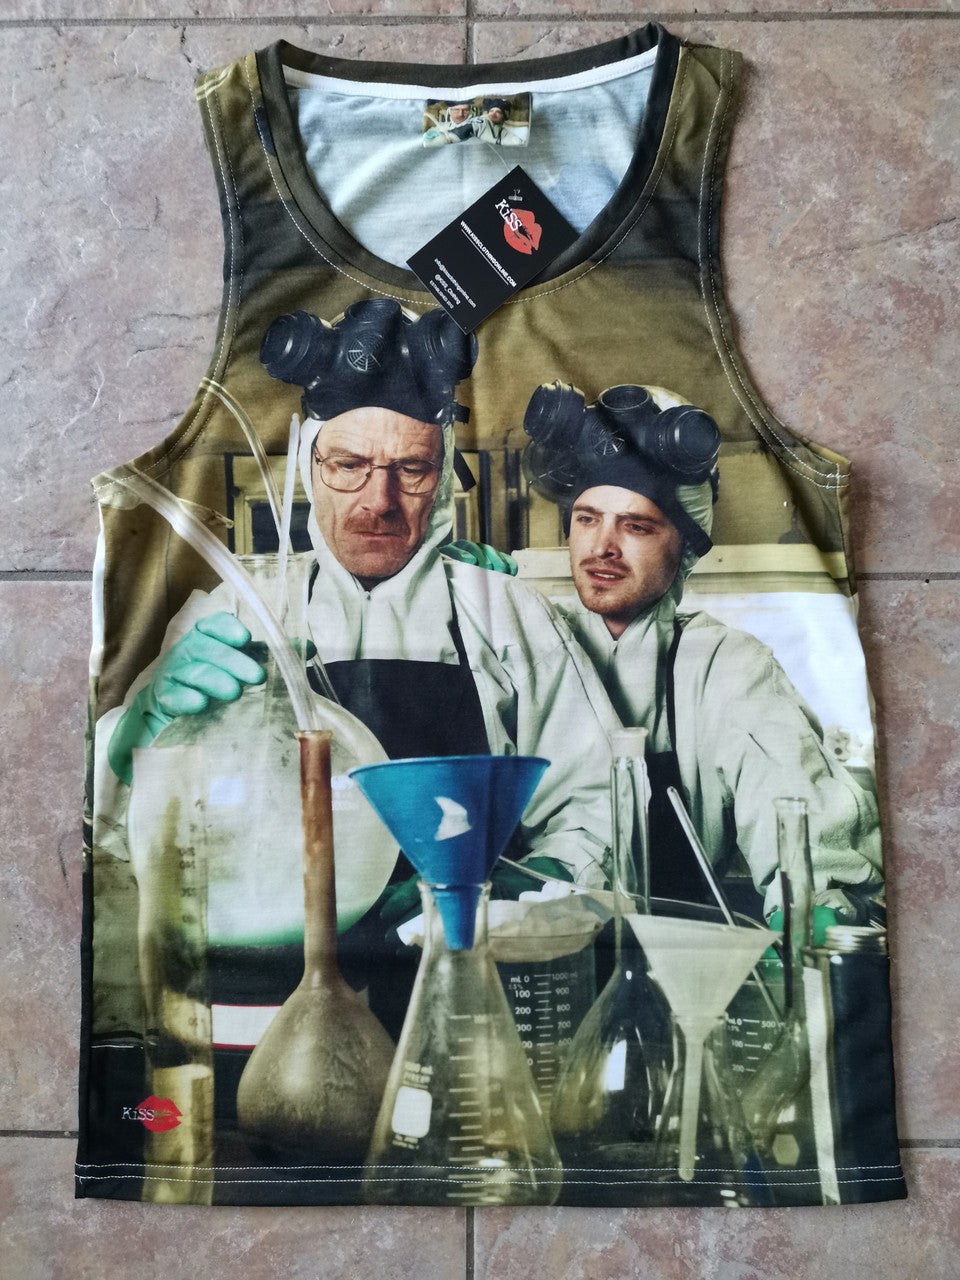 Breaking Bad KiSS Vest - Walter White Jesse Pinkman - Cooking - Heisenberg Tv show inspired